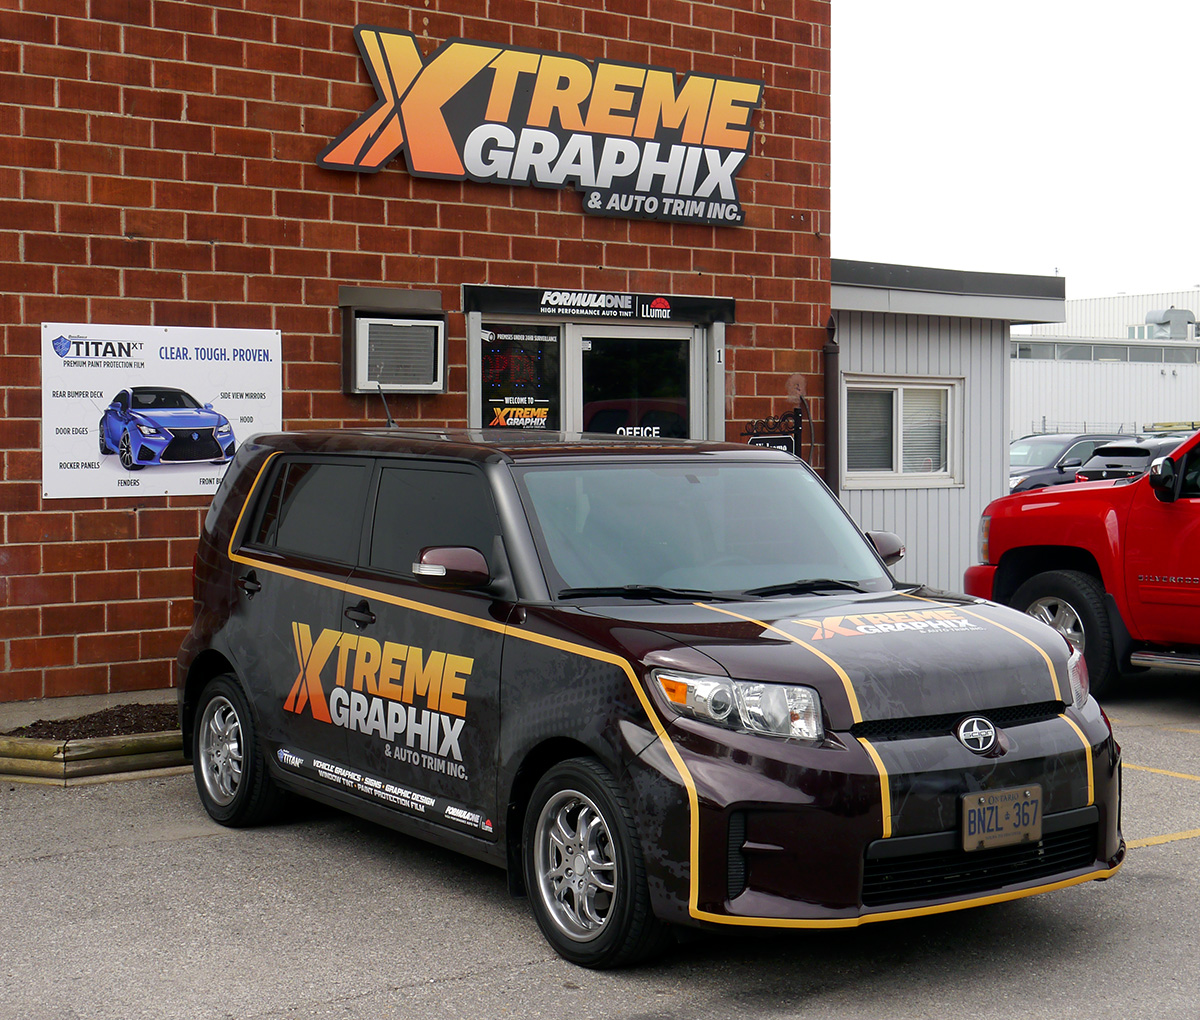 Xtreme Graphix & Auto Trim Inc.